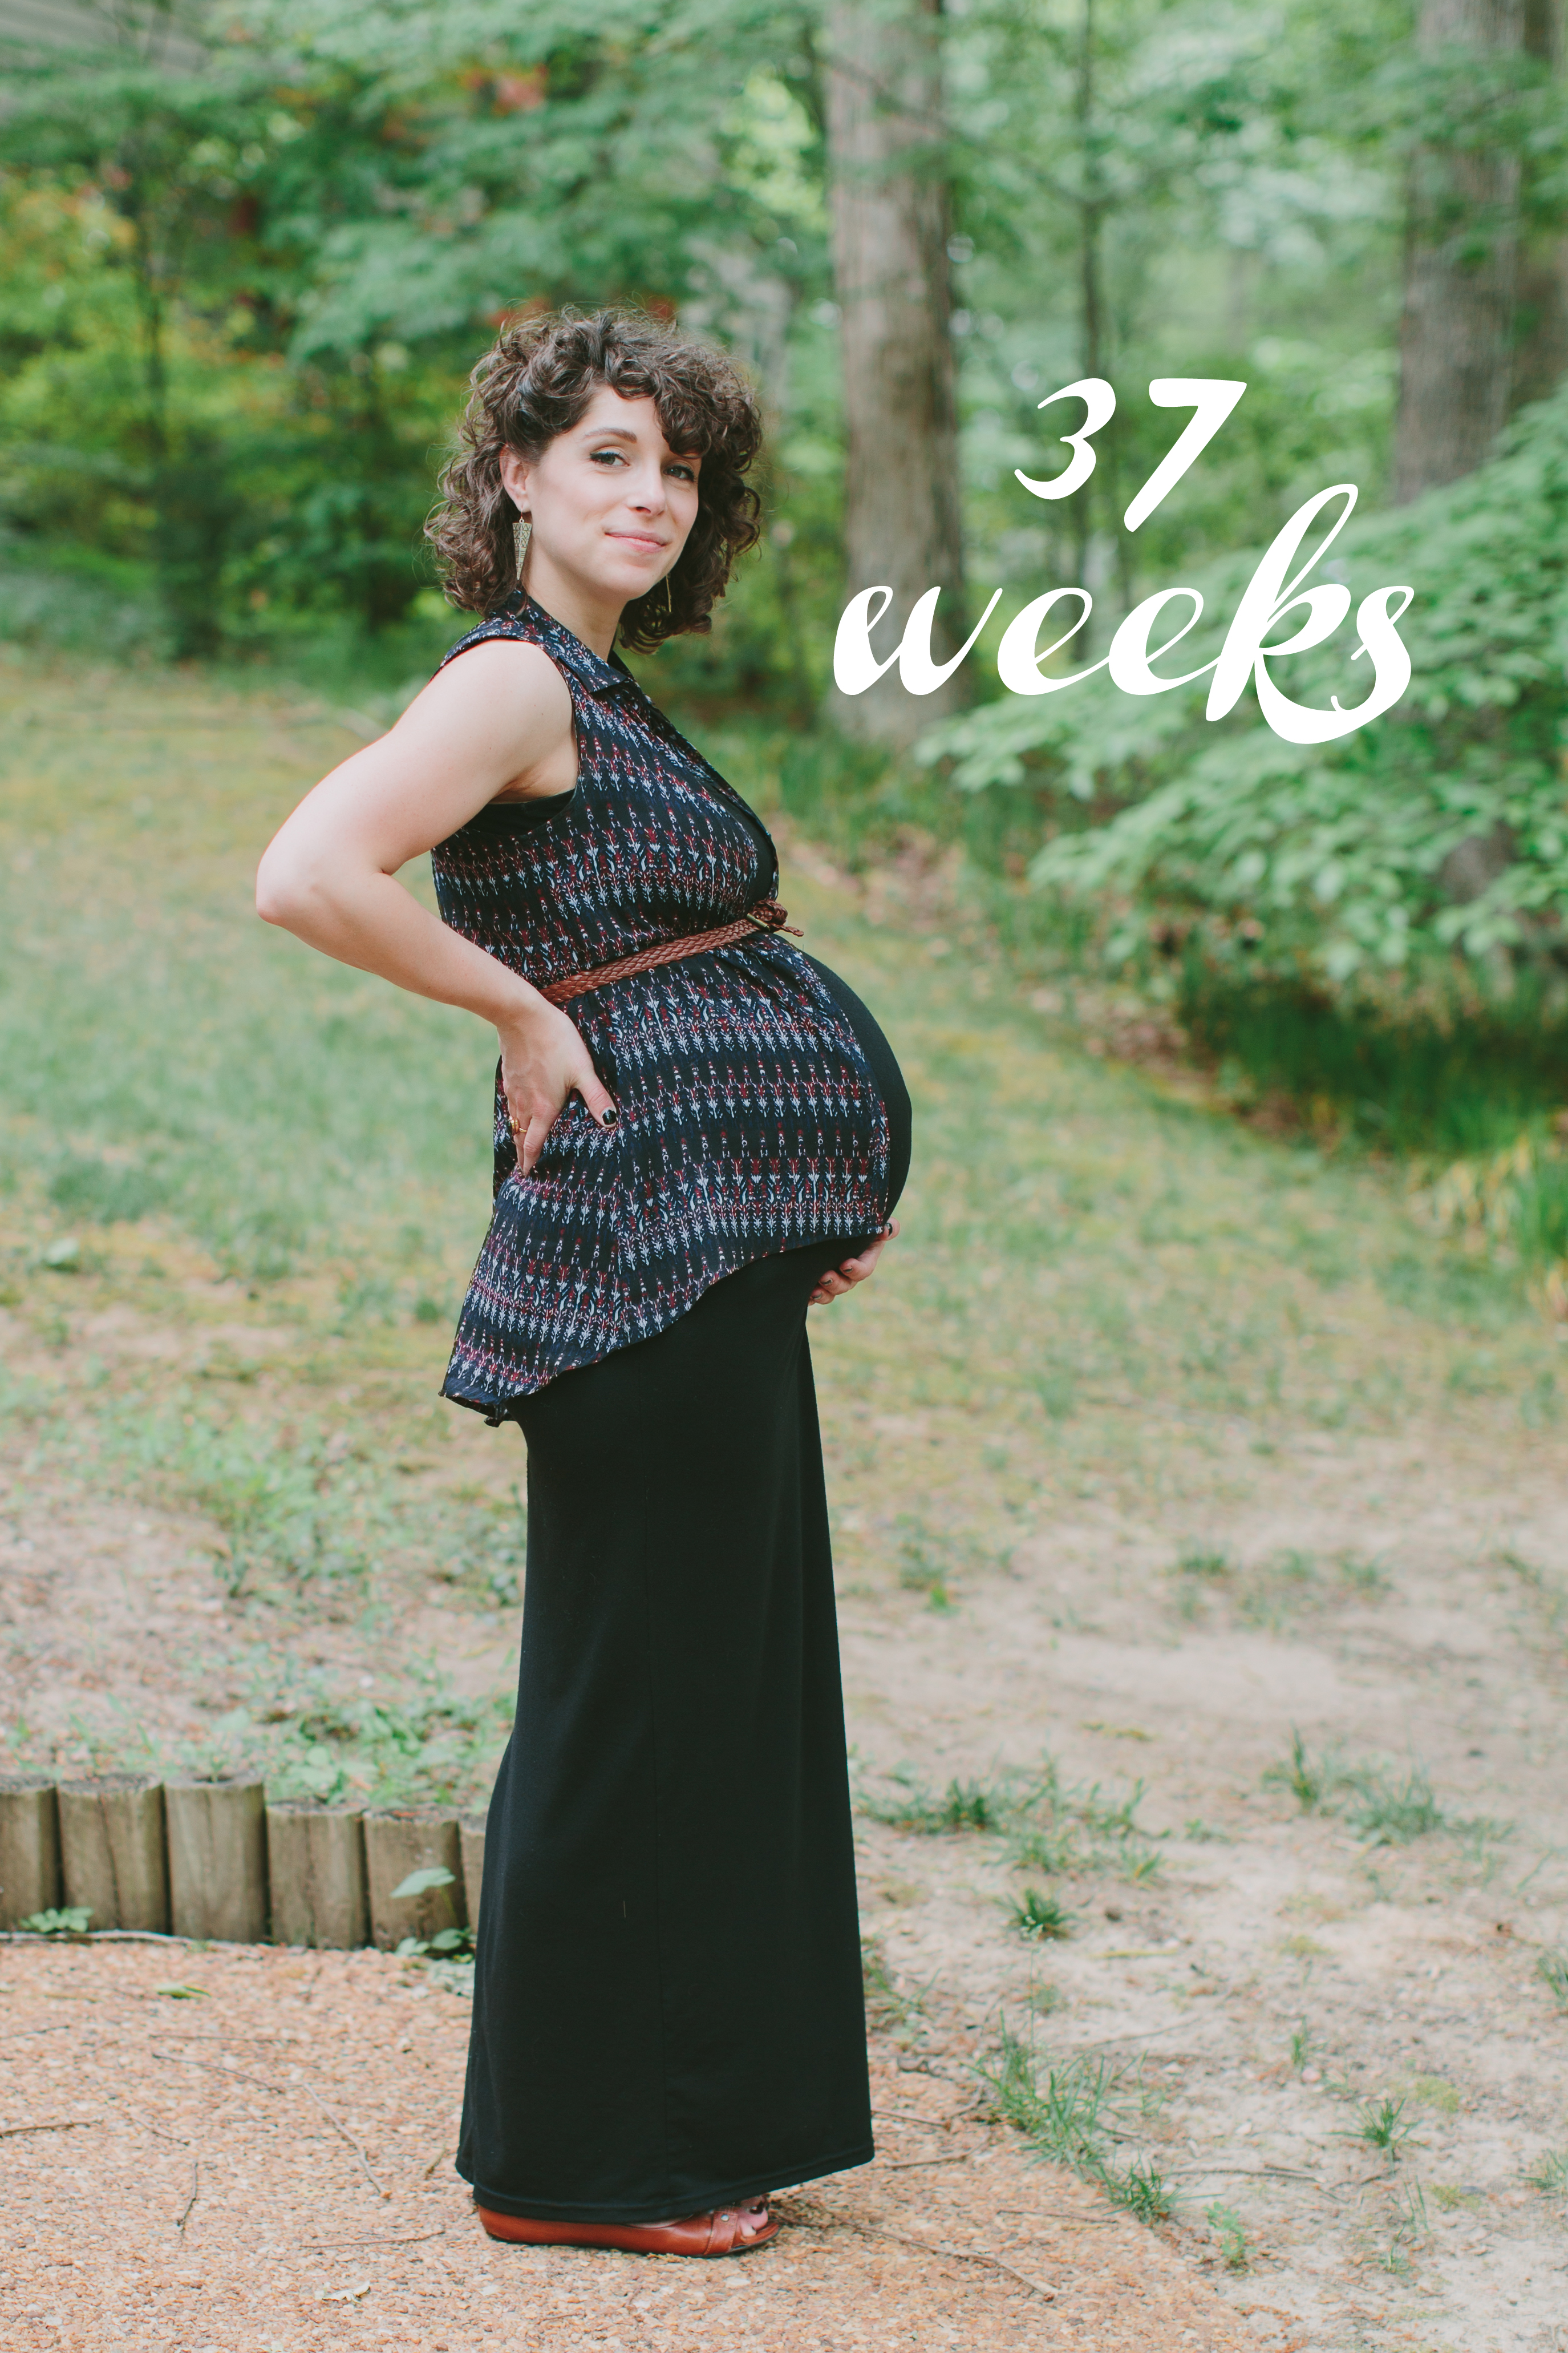 Baby #2 Bumpdate: Weeks 28 - 35 - Tori Watson